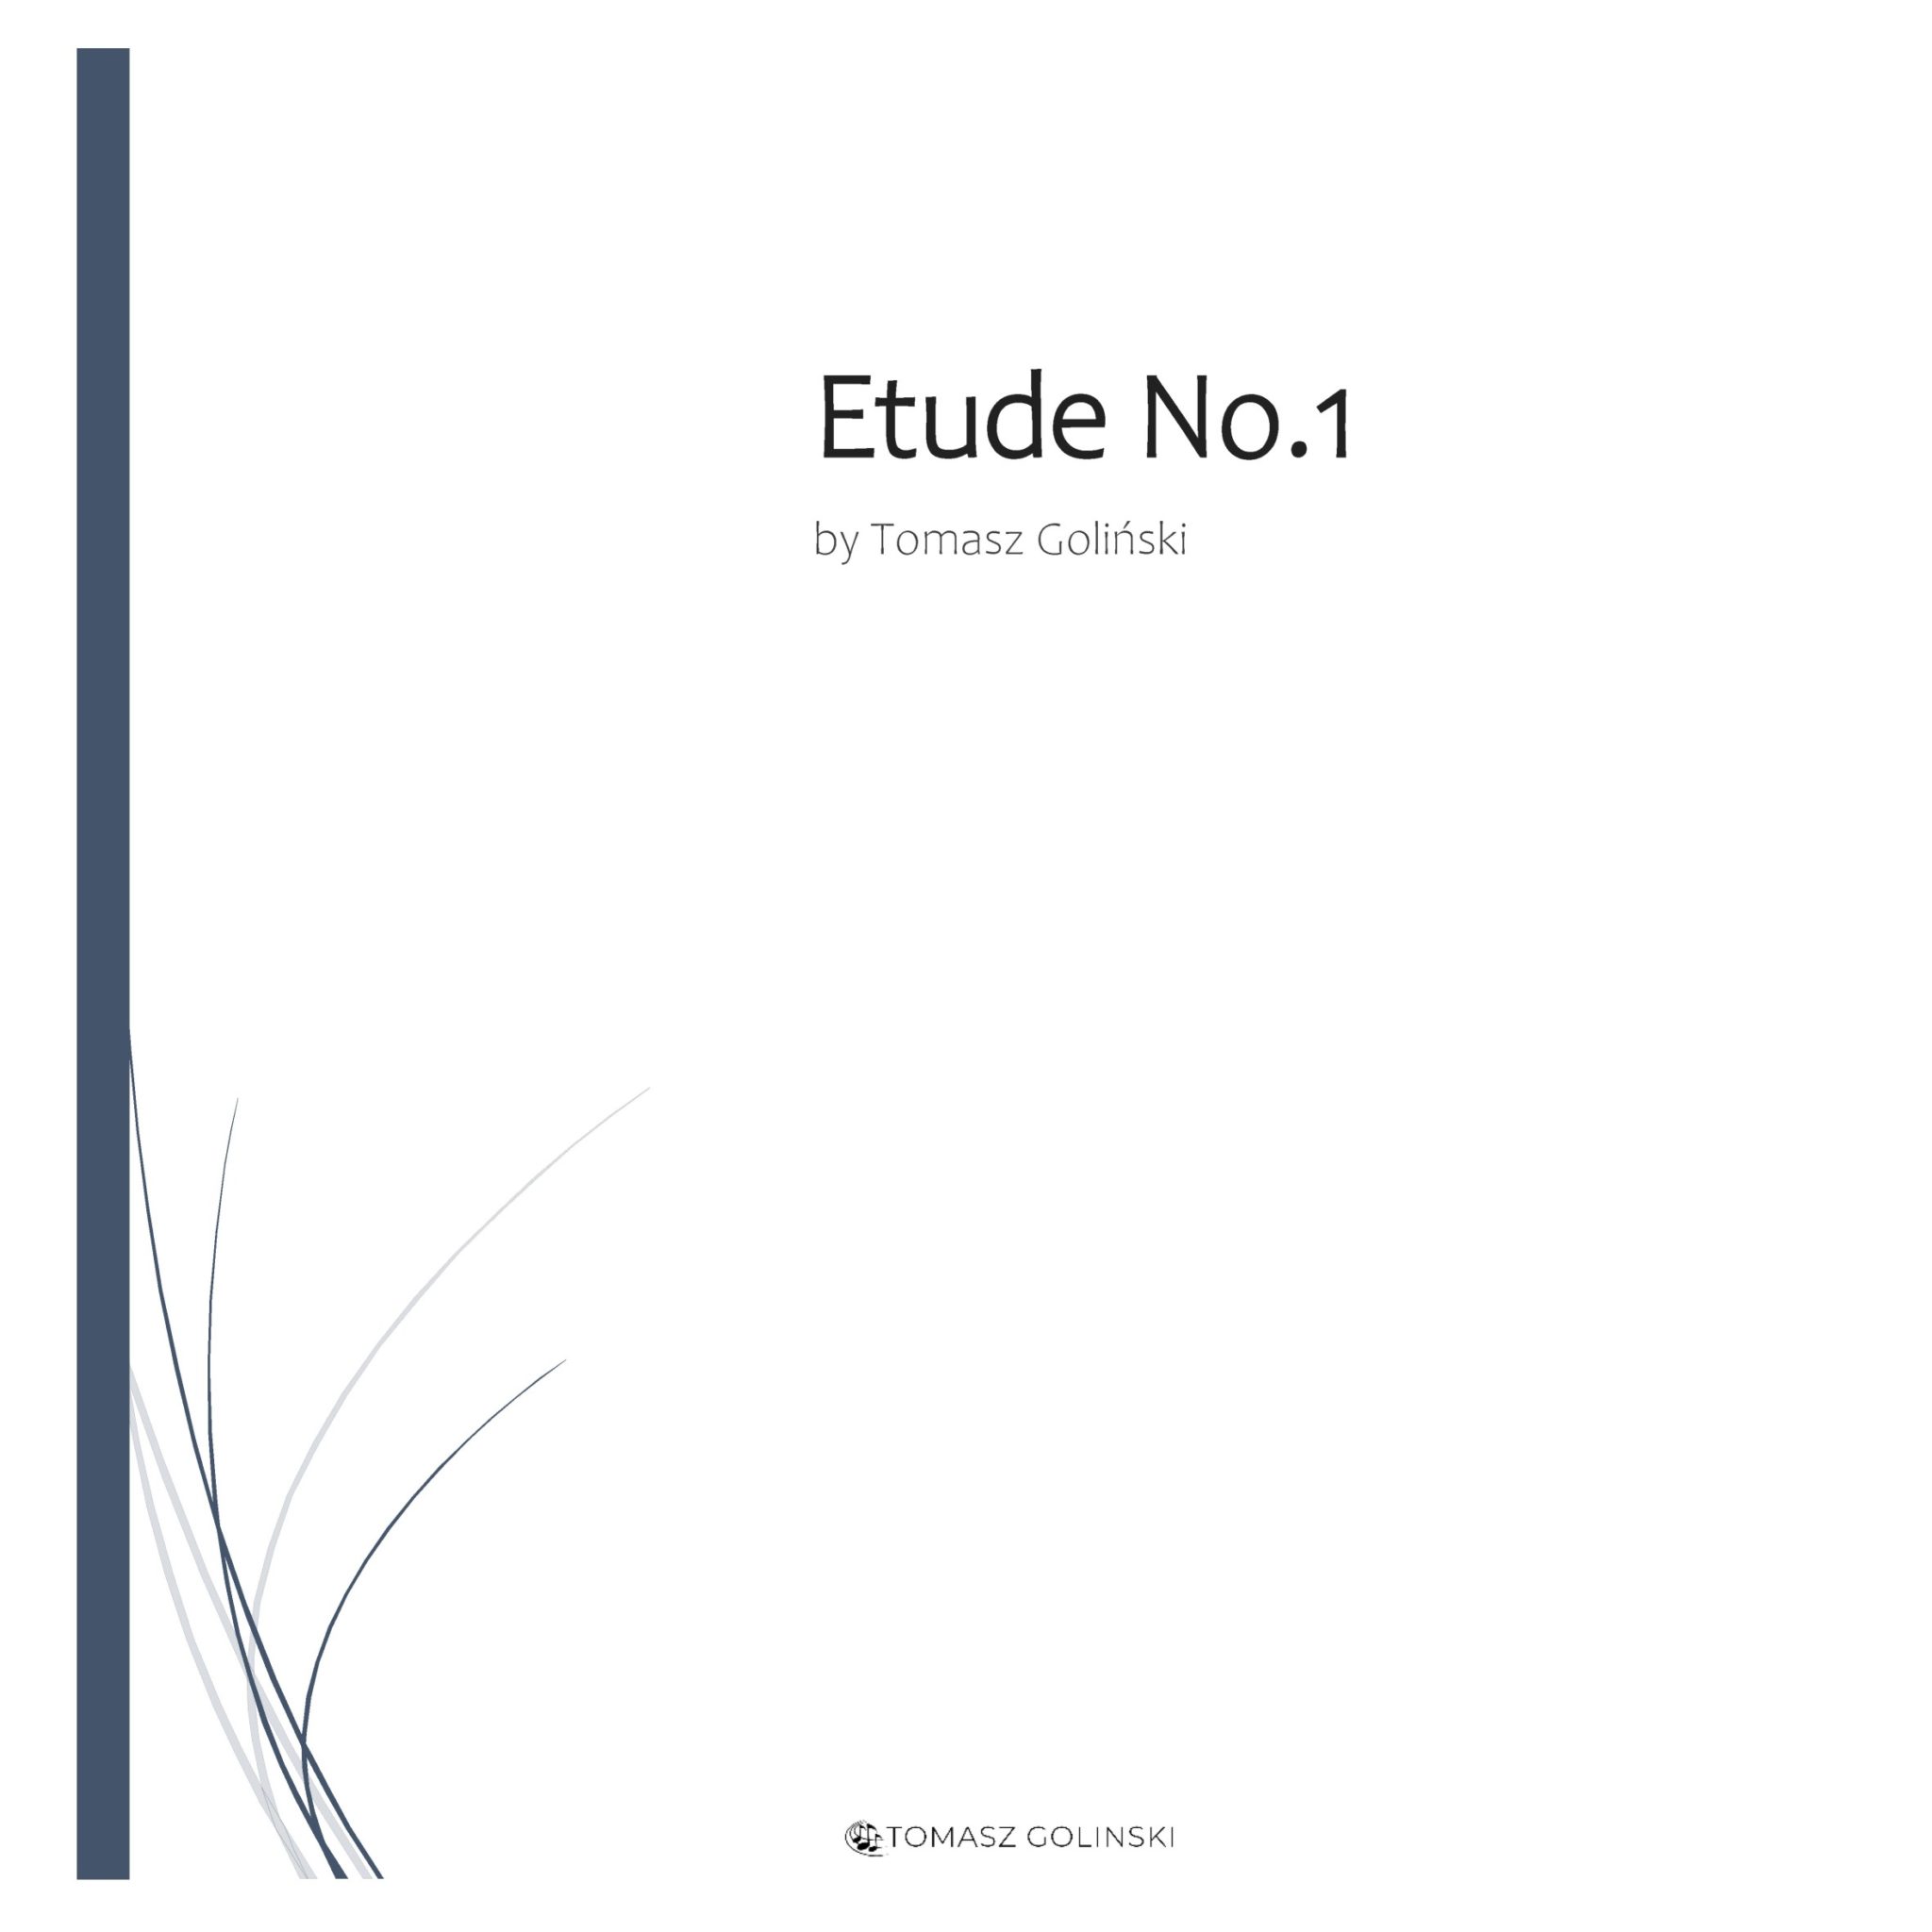 Etude No1 by Tomasz Golinski